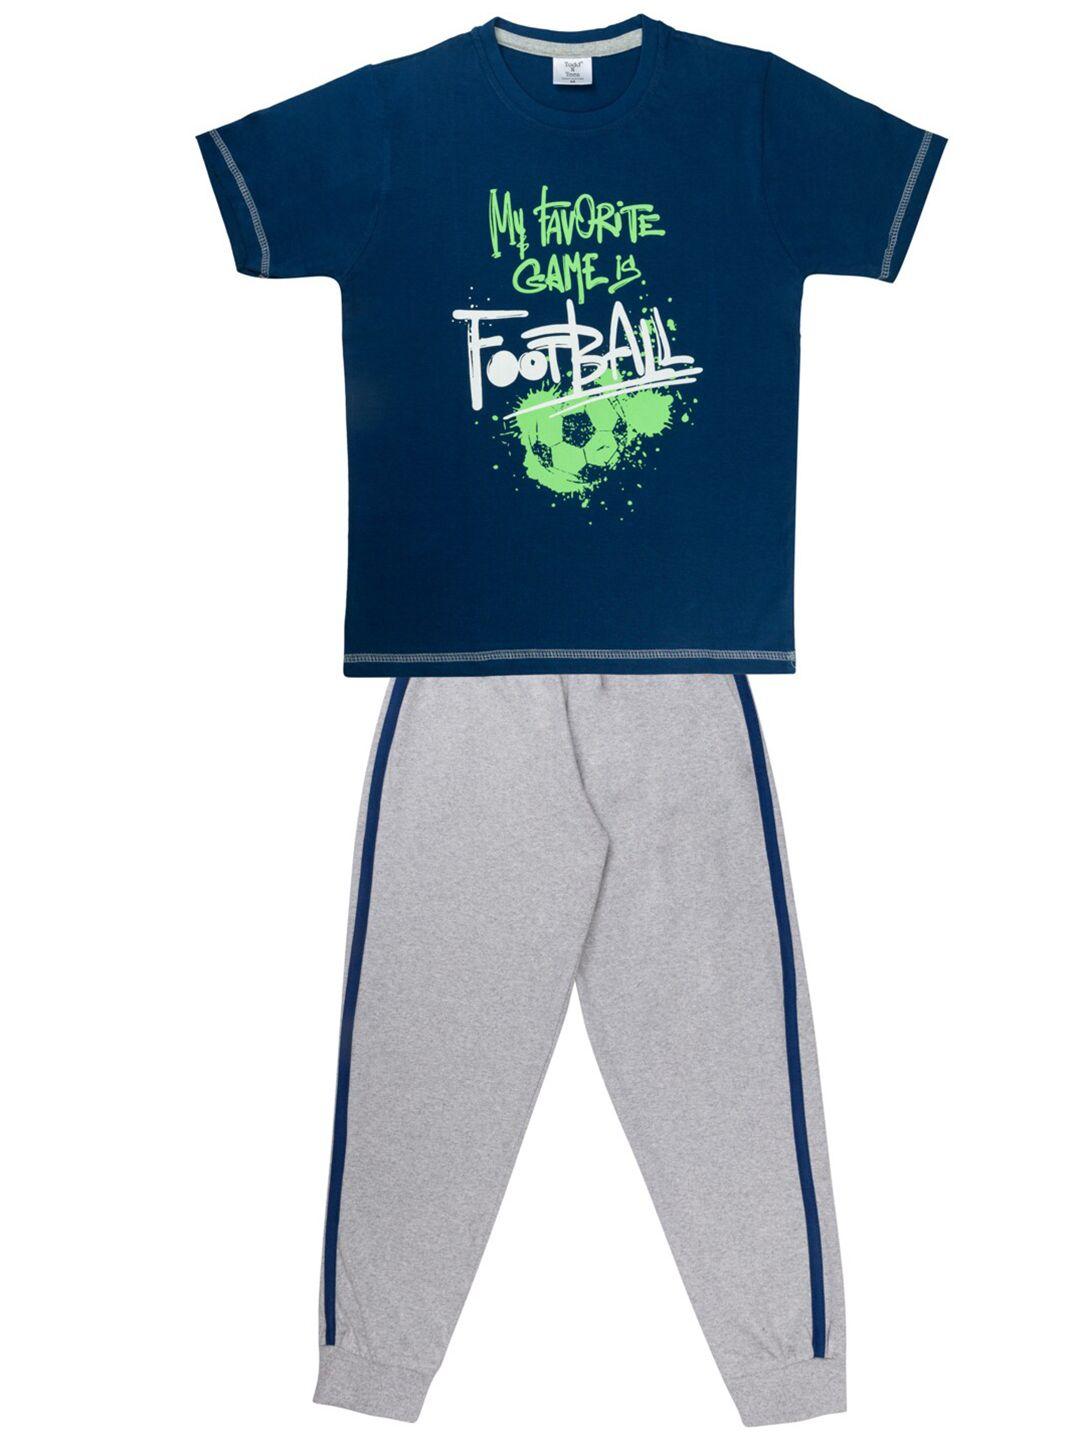 todd n teen boys navy blue & grey printed t-shirt with pyjamas